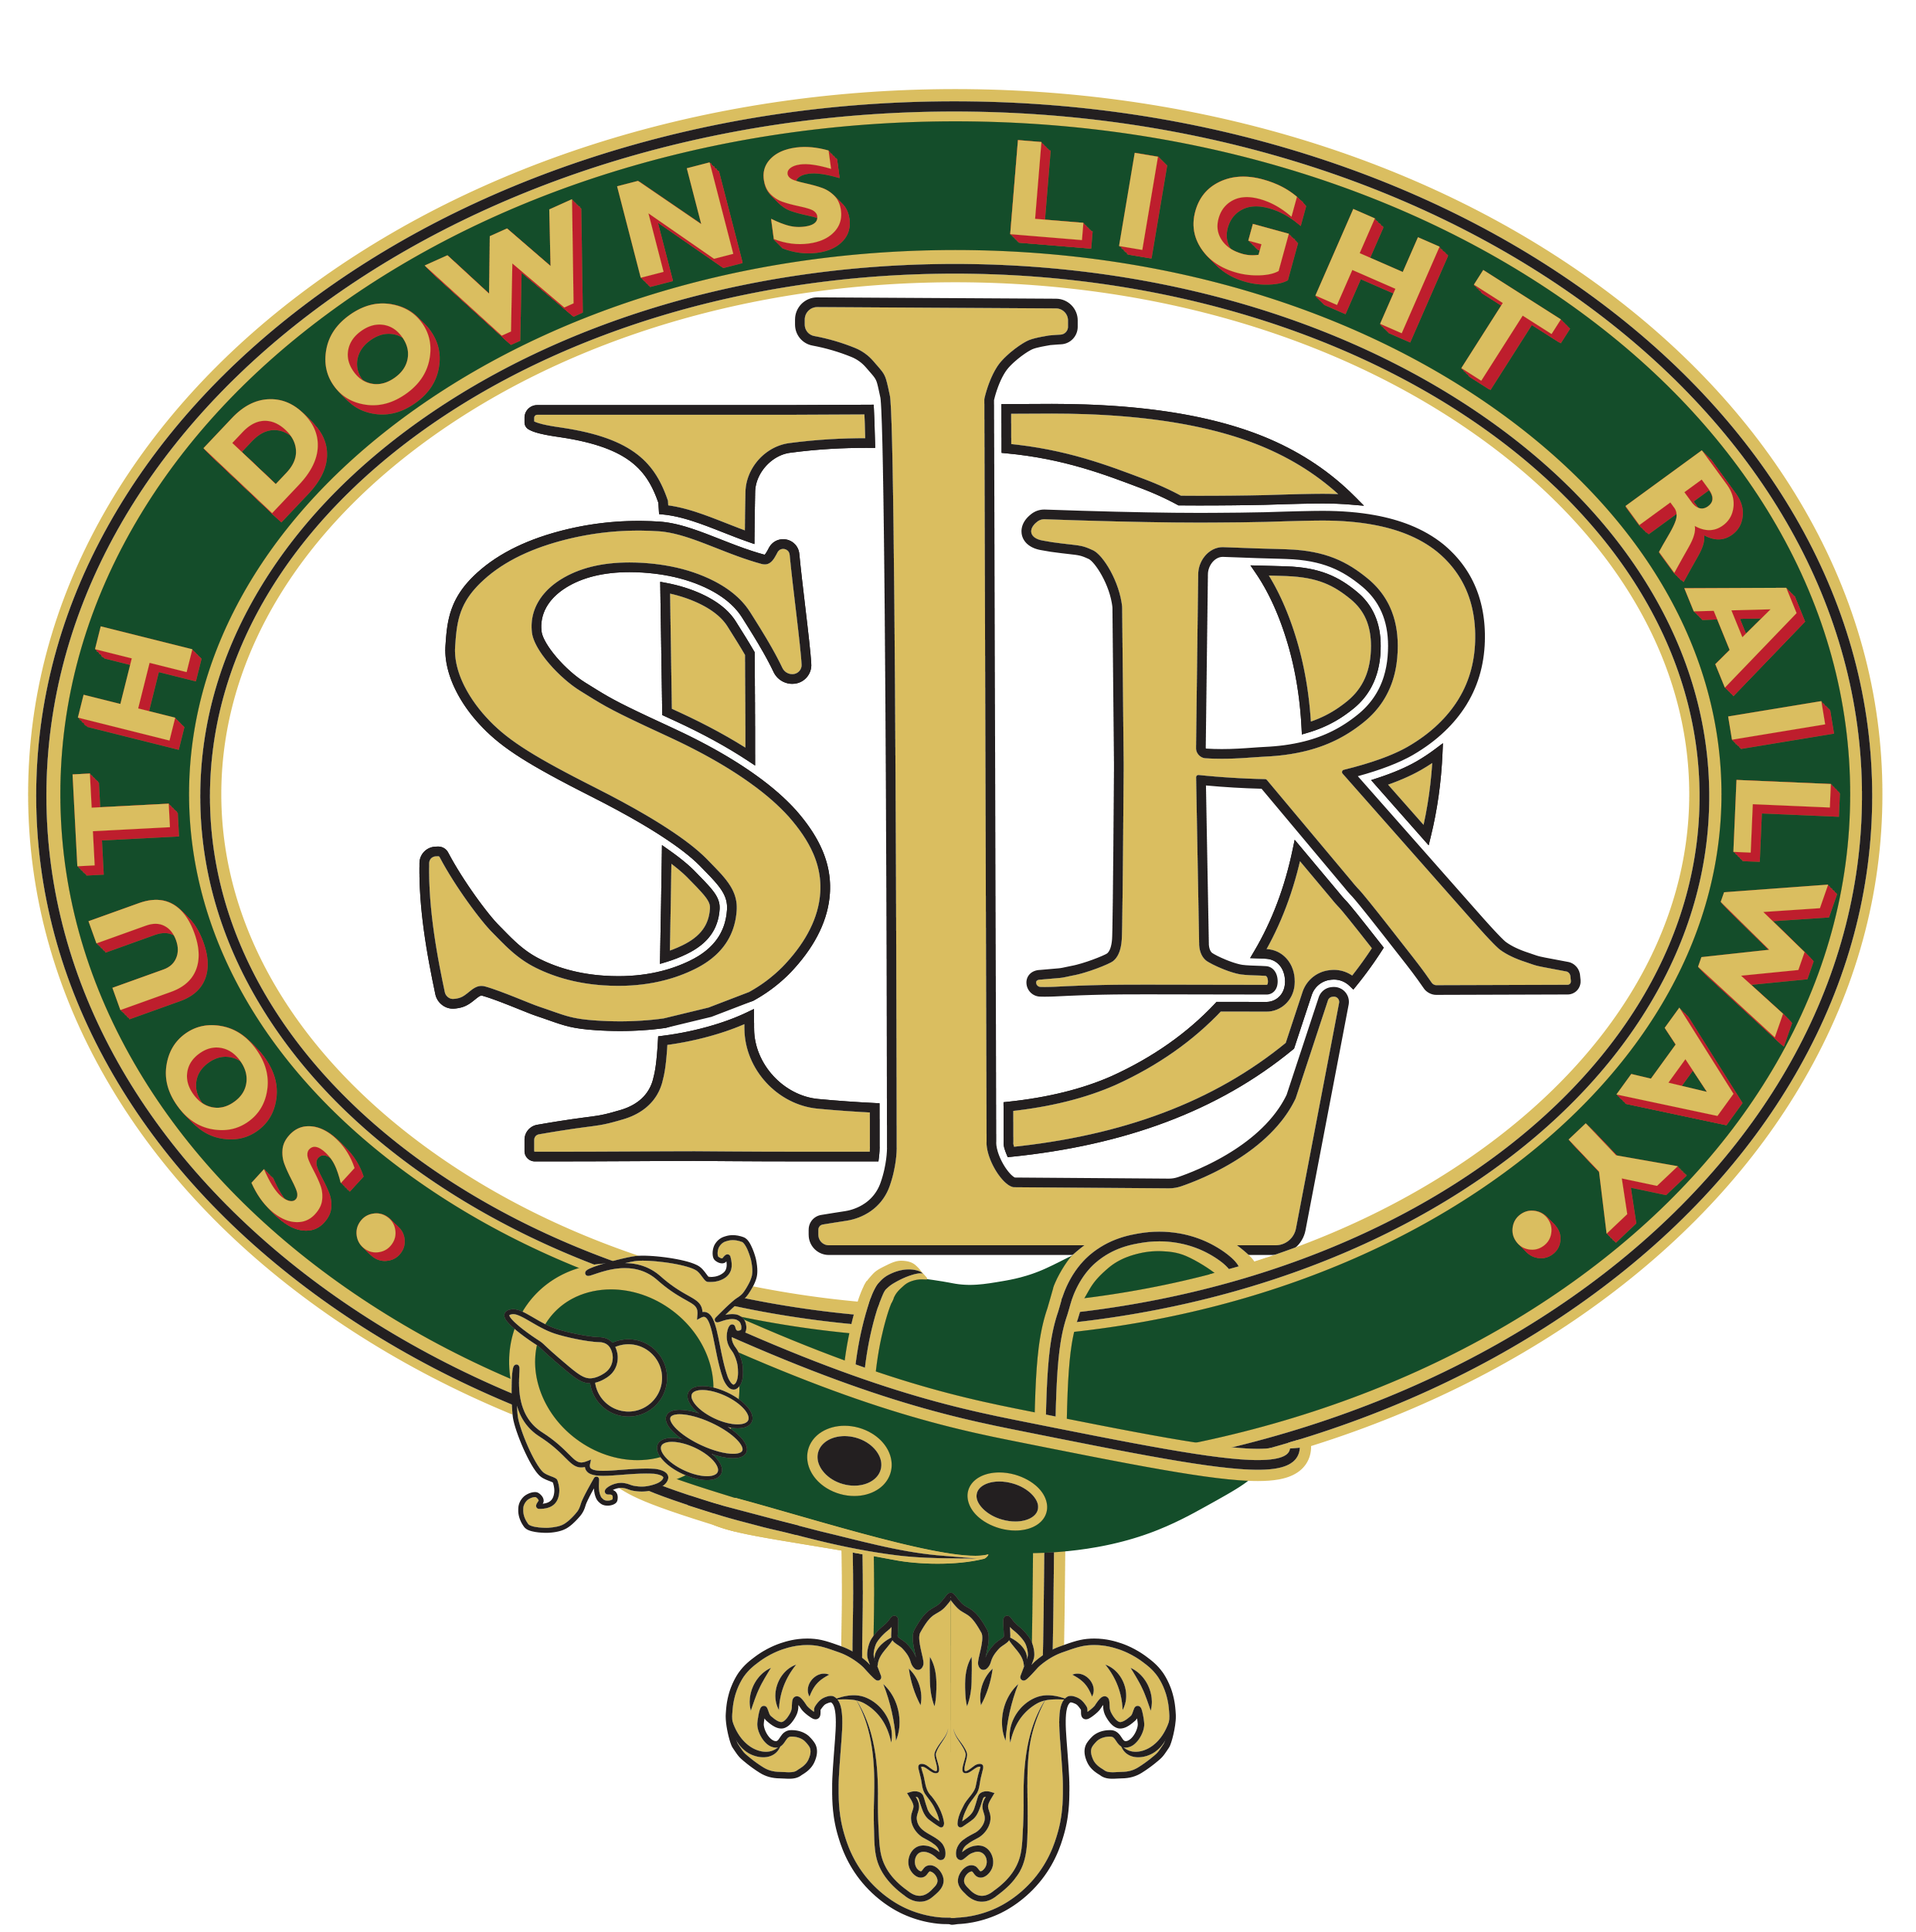 South Downs Light Railway